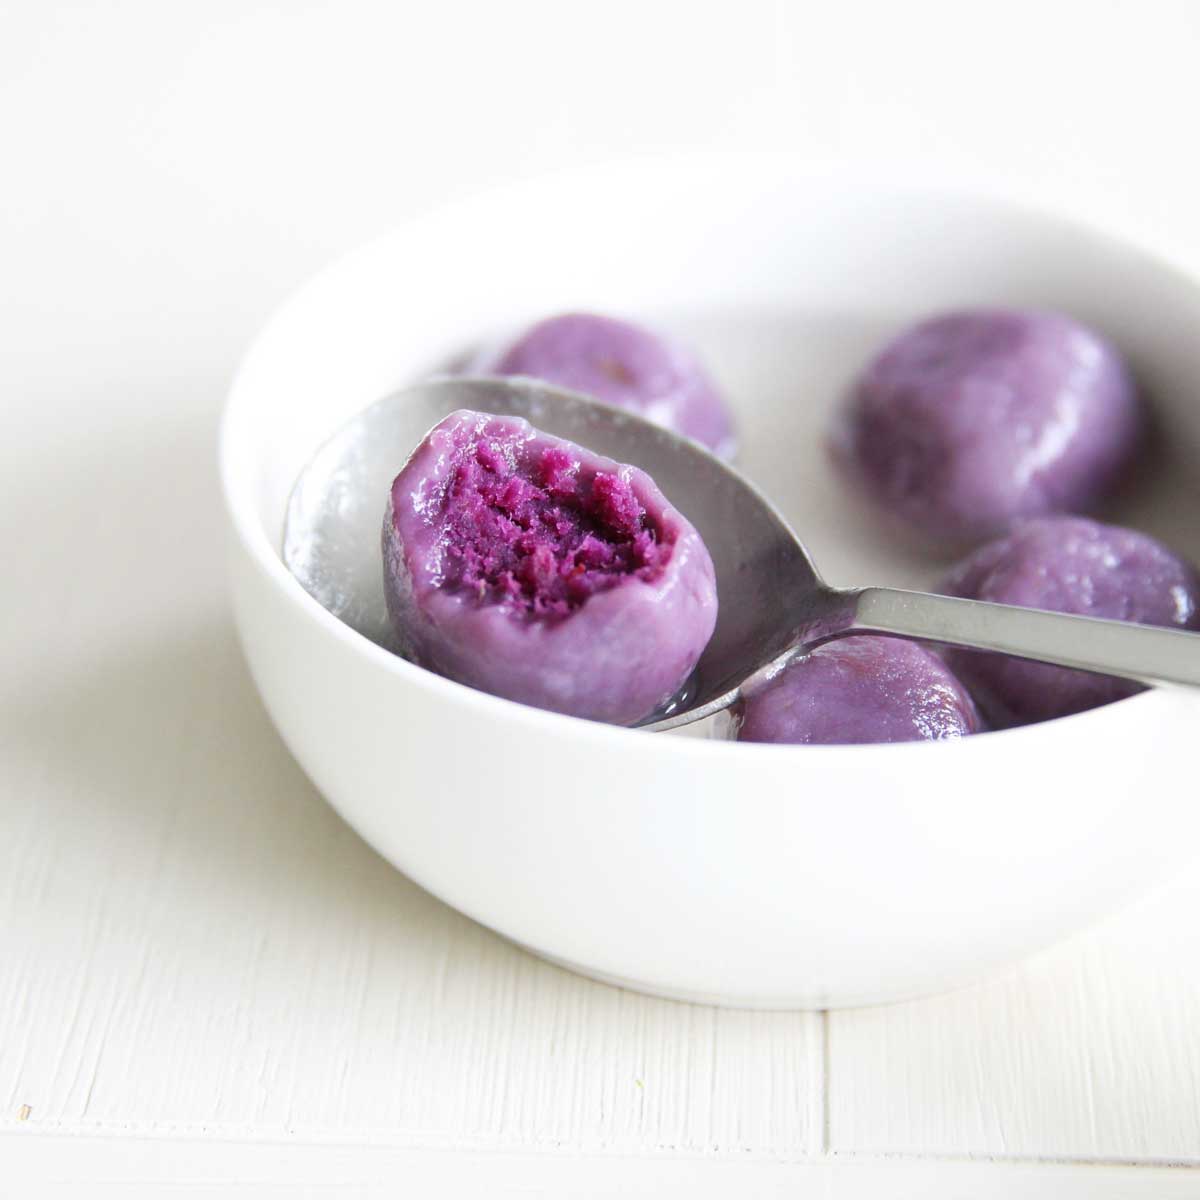 Ube Sweet Rice Balls with Purple Yam Filling (Gluten Free, Vegan Recipe) - Walnut Butter Glaze